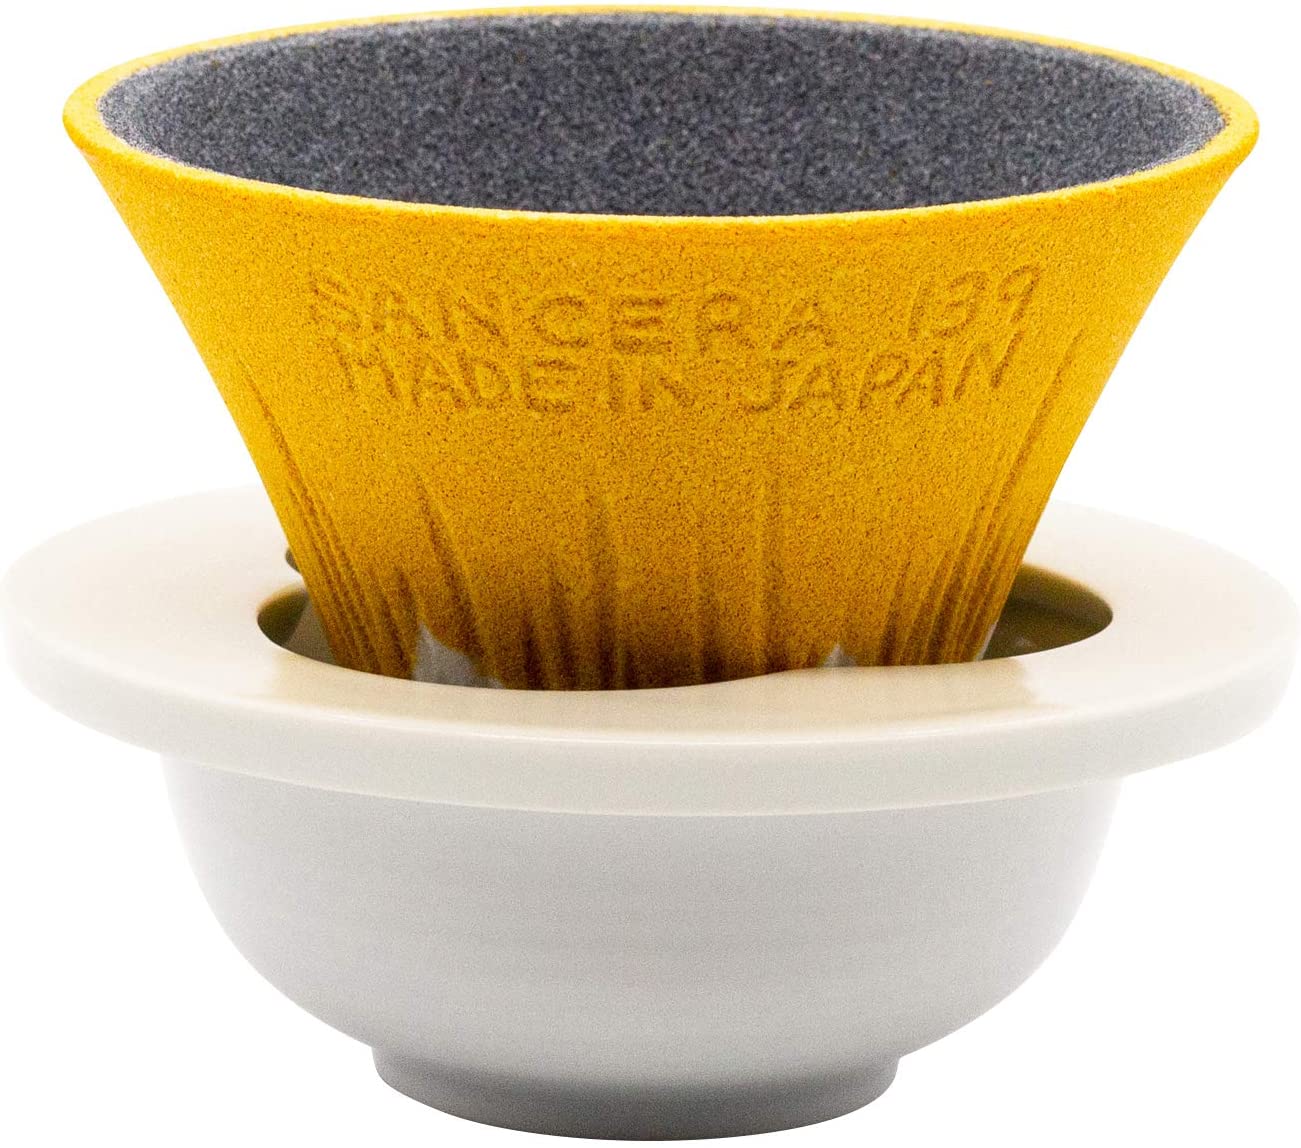 COFIL fuji - Coffee Dripper แก้วดริฟกาแฟทรงภูเขาไฟฟูจิ Made in Japan/มี6สีให้เลือก